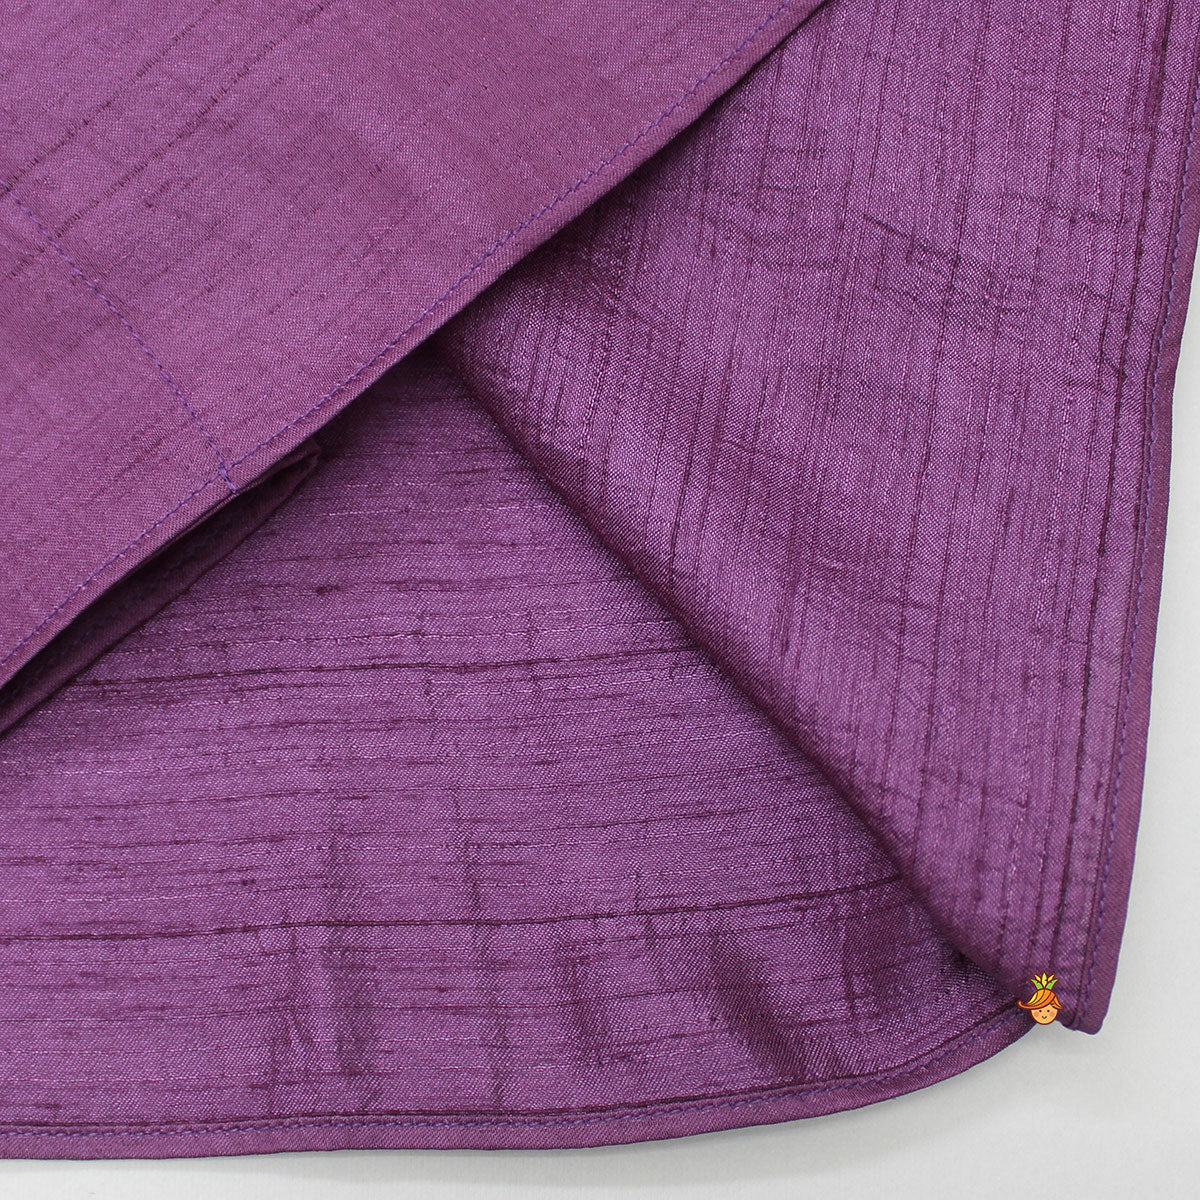 Stunning Embroidered Purple Kaftan Top And Cowl Pant